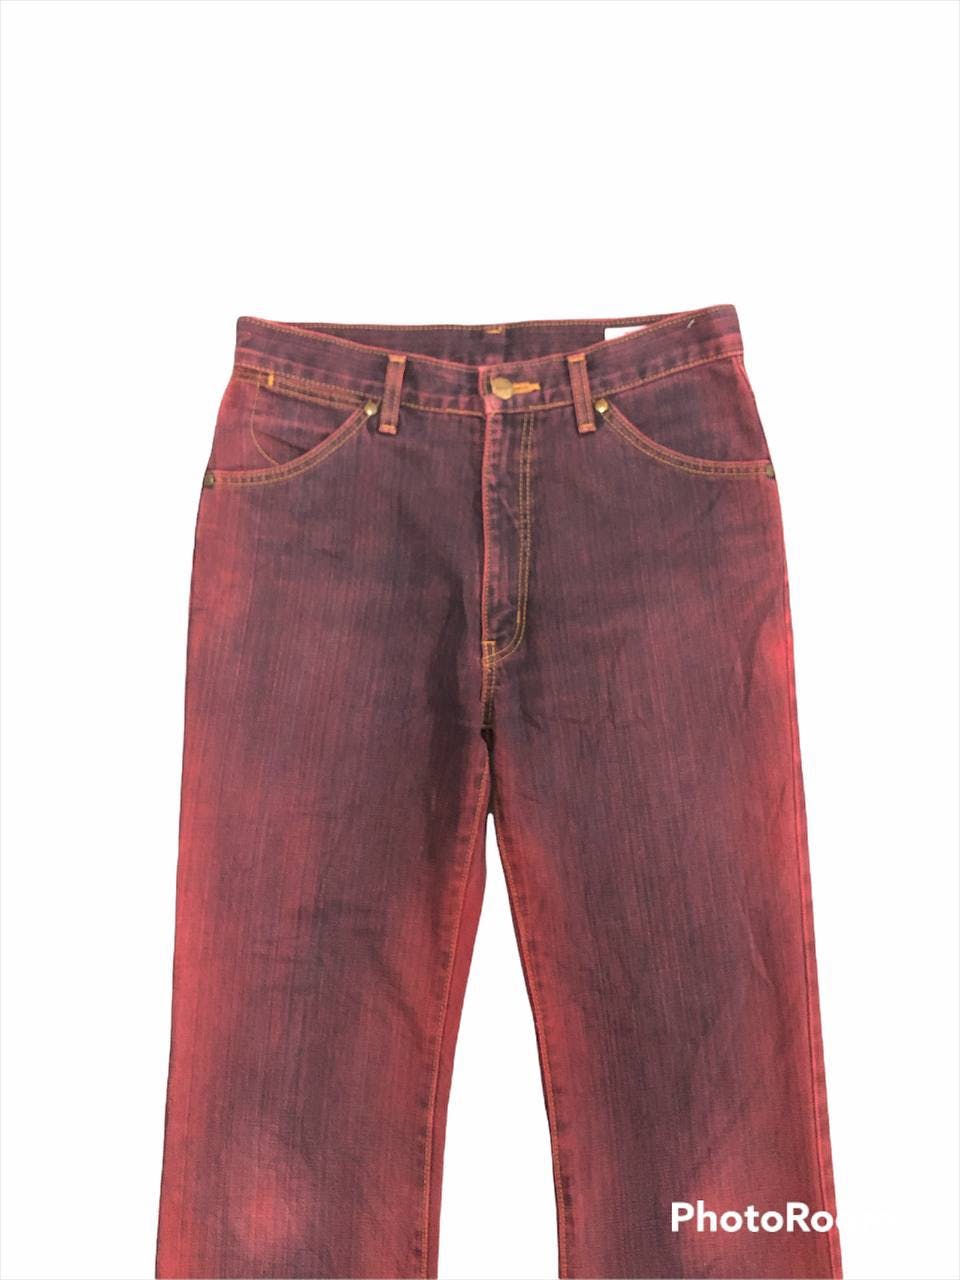 Vintage Wrangler Faded Marron Denim Pants - 3